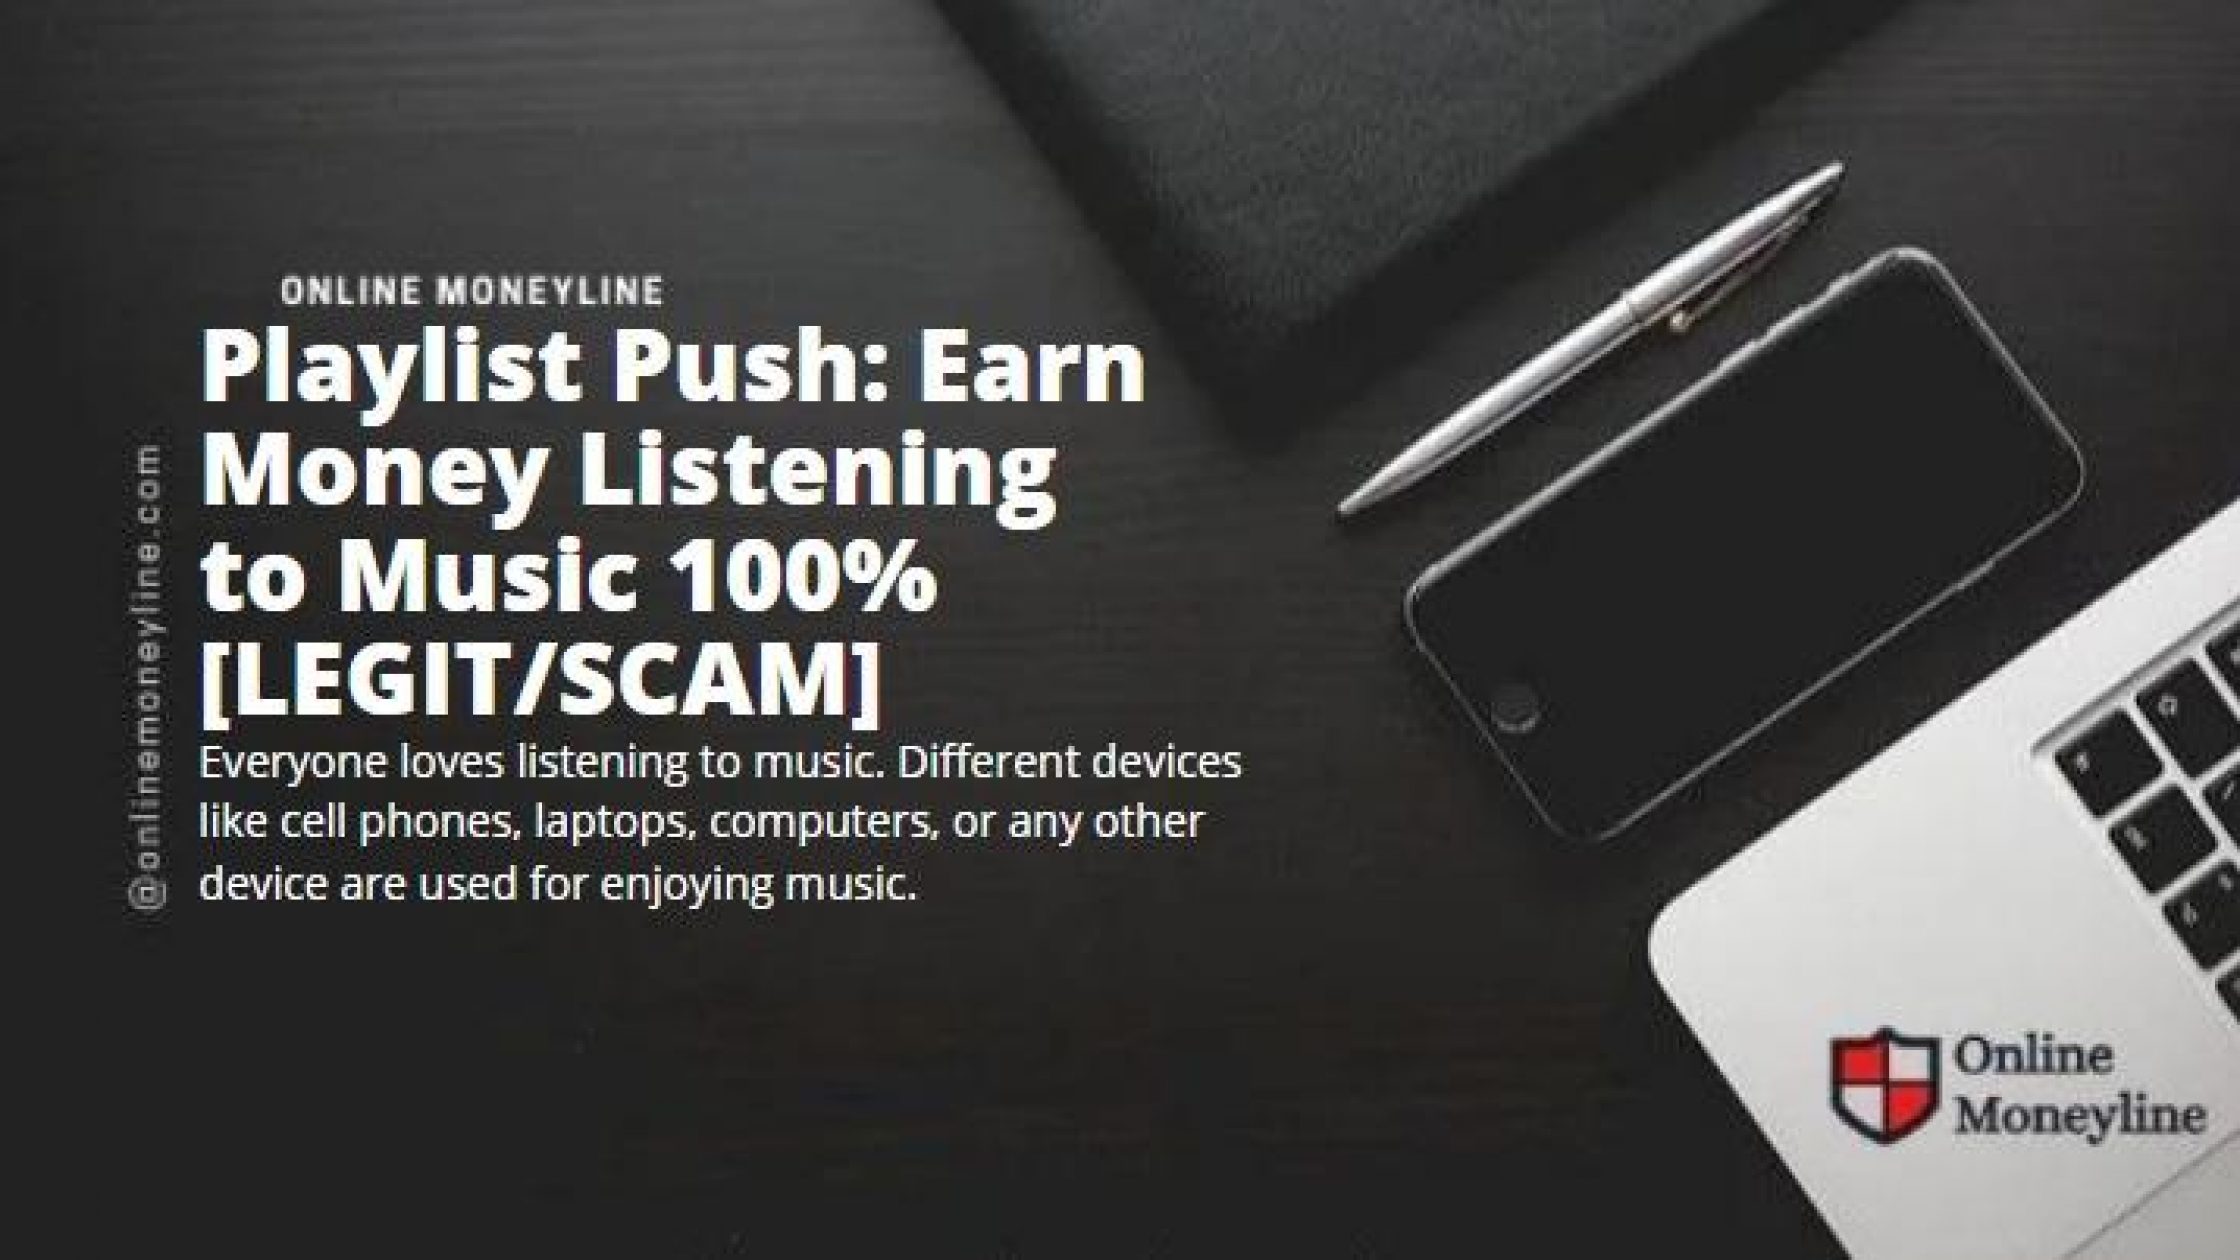 Playlist Push: Earn Money Listening to Music 100% [LEGIT/SCAM]